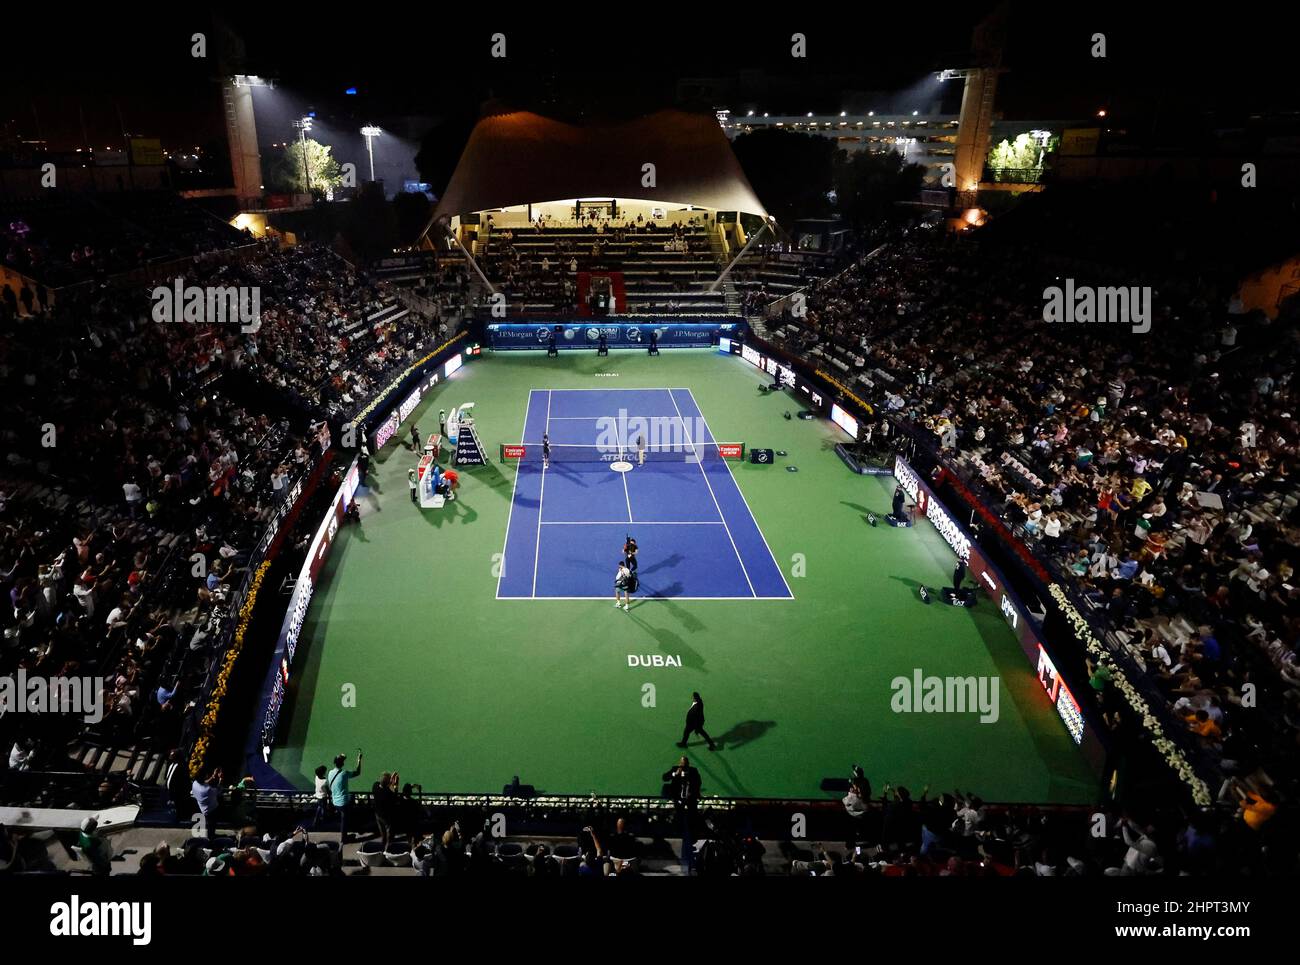 Tennis - ATP 500 - Dubai Tennis Championships - Aviation Club Tennis Centre,  Dubai, United Arab Emirates - February 23,